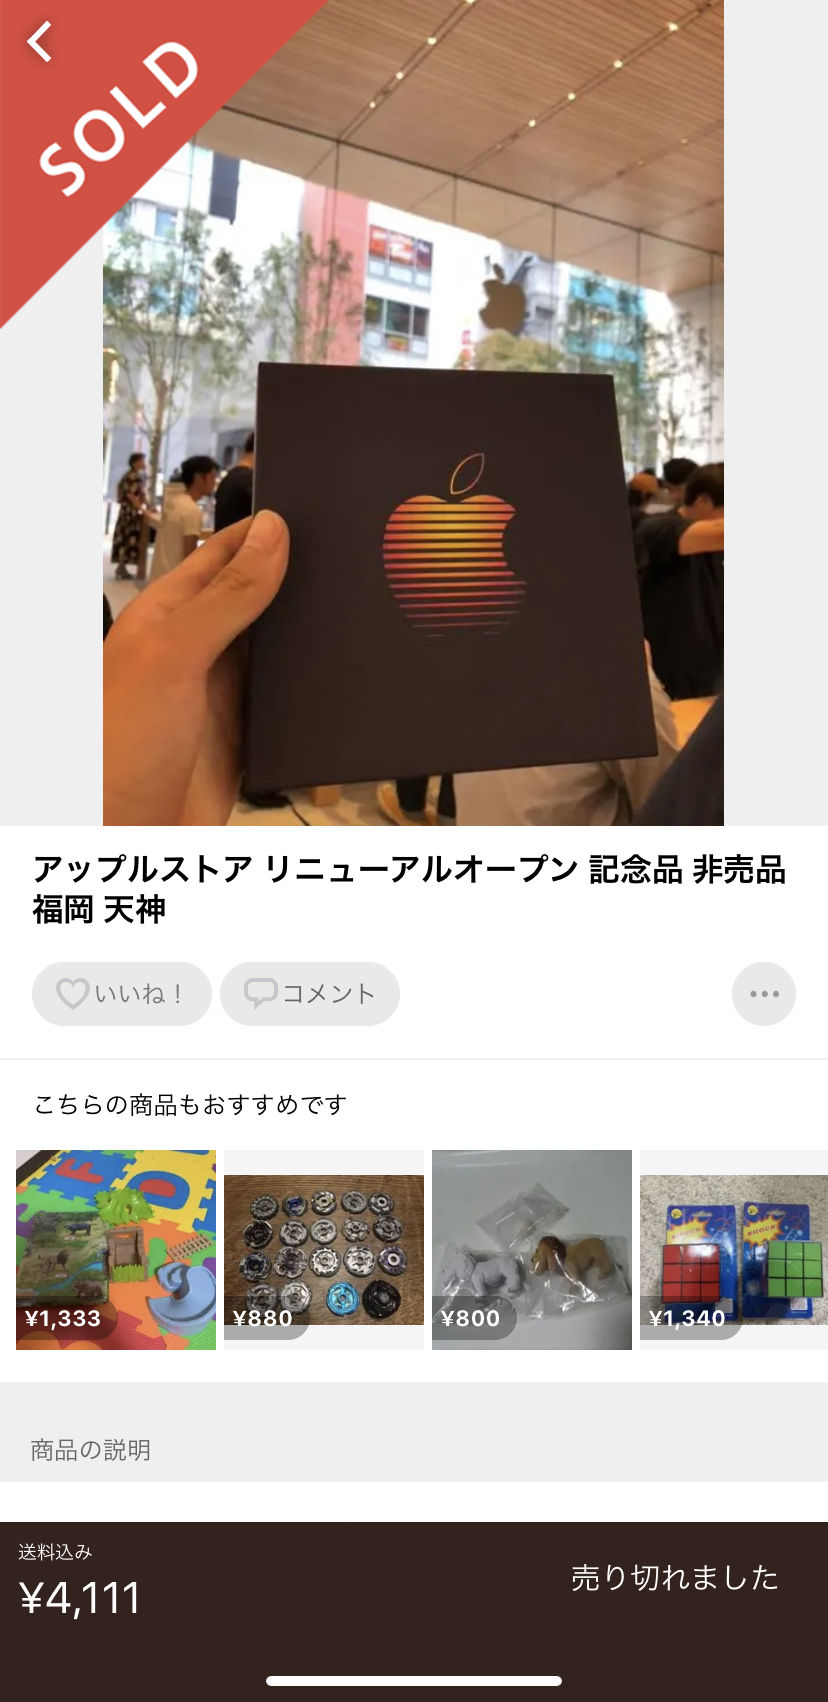 AppleStoreFukuoka tenbai 02